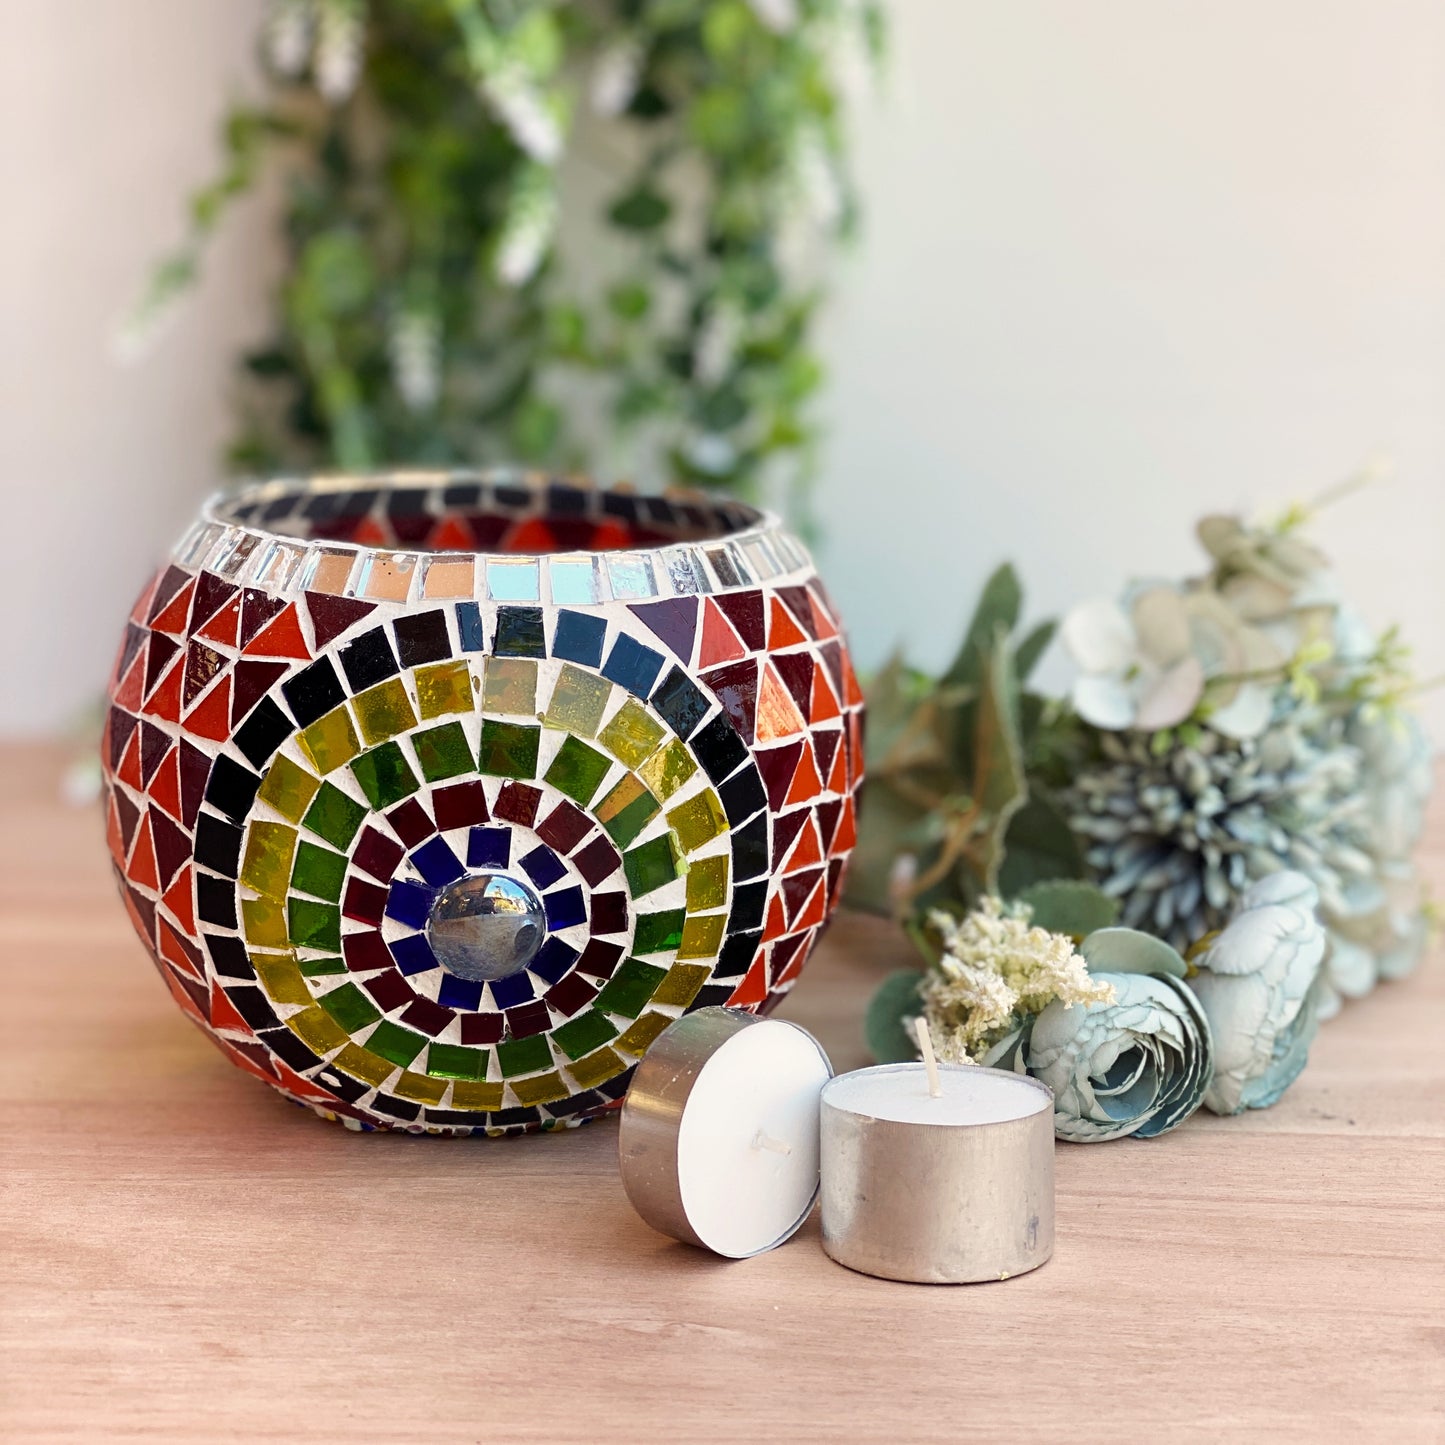 Turkish Mosaic Tea Light Ornamental Piece - Handmade in Turkey